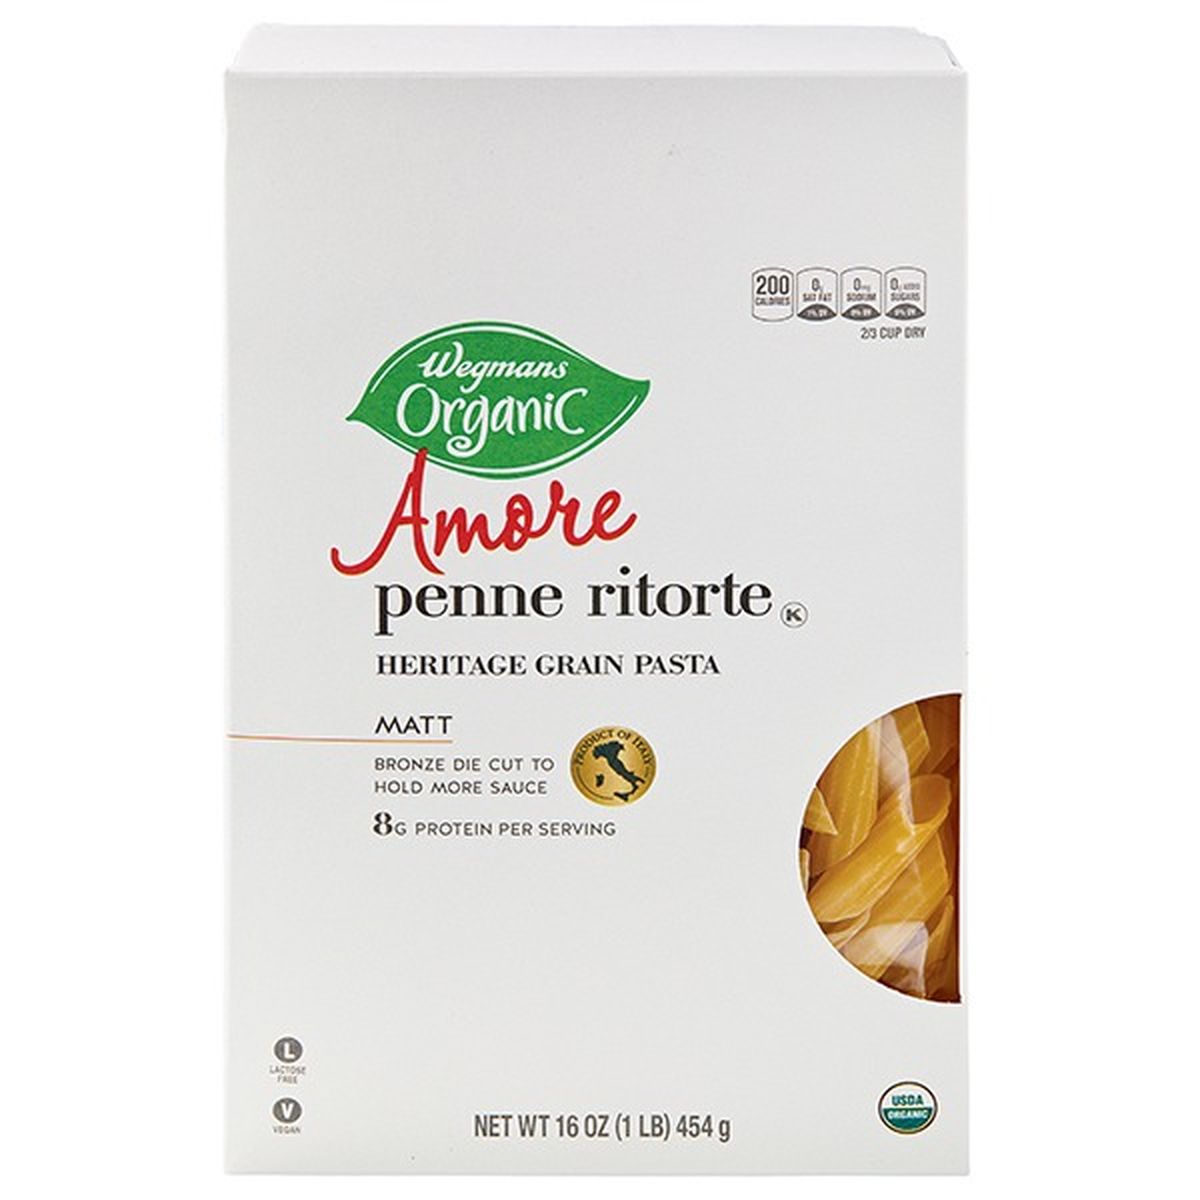 Calories in Wegmans Organic Amore Penne Ritorte, Heritage Grain Pasta, Matt